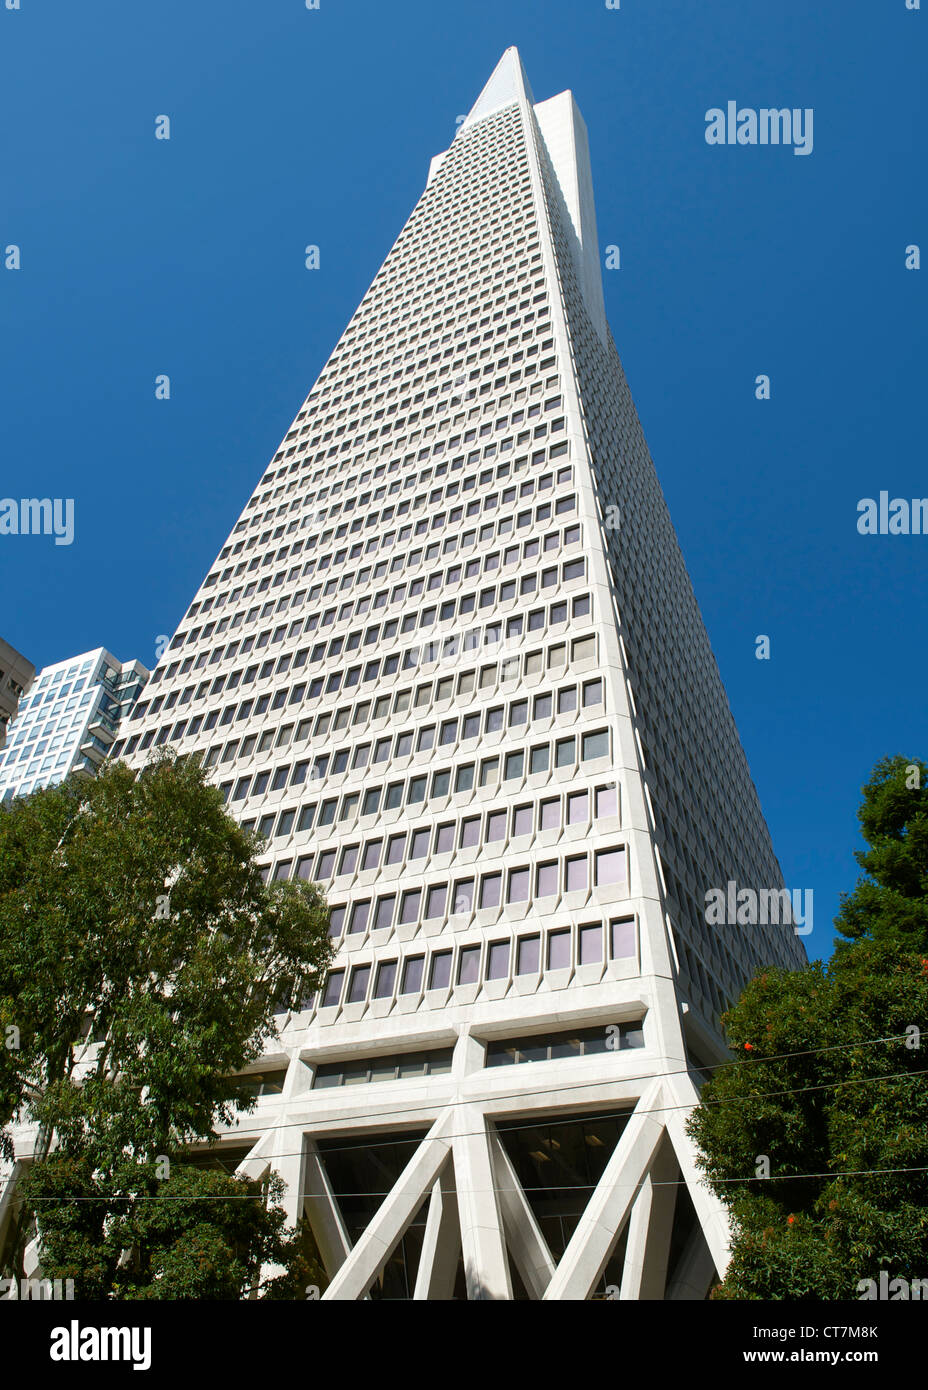 The Transamerica pyramid building in San Francisco, California, USA. Stock Photo